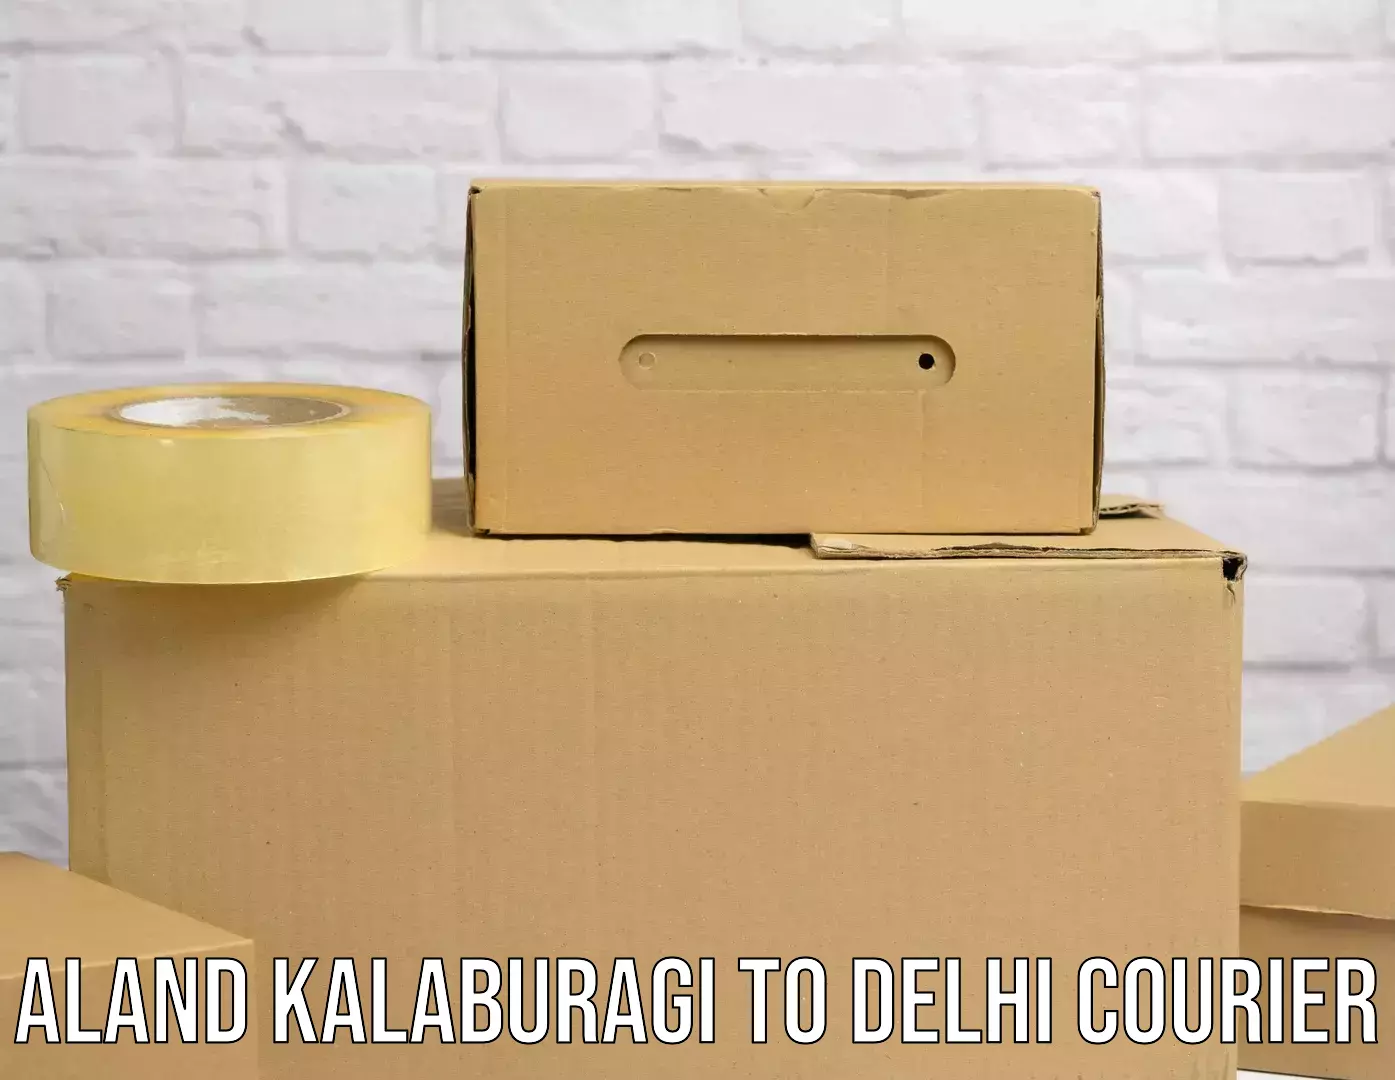 Premium courier services Aland Kalaburagi to Ramesh Nagar